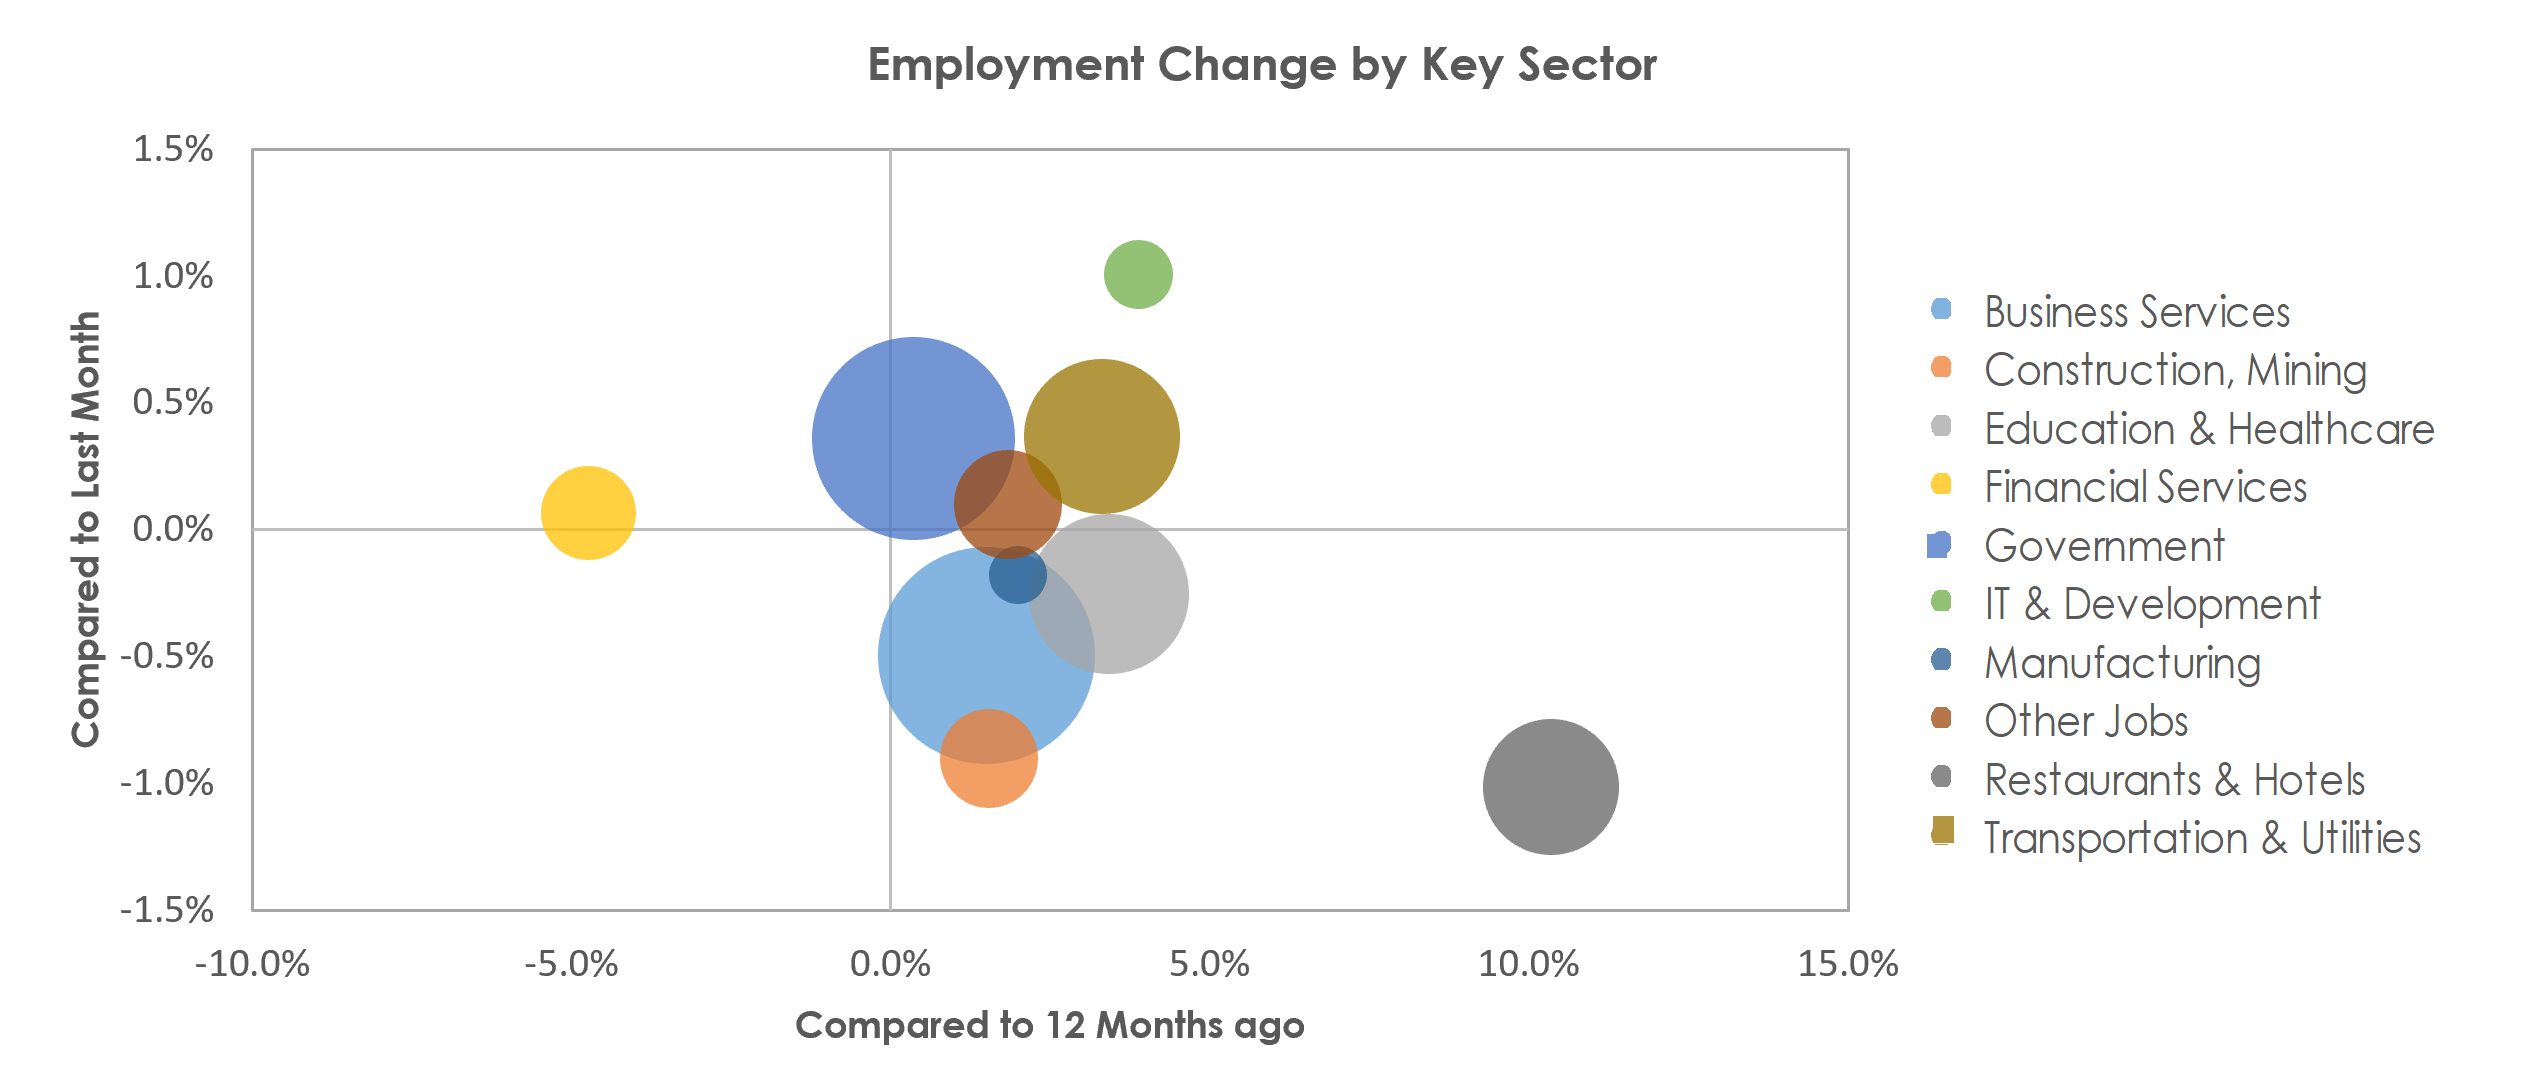 Washington-Arlington-Alexandria, DC-VA-MD-WV Unemployment by Industry August 2022